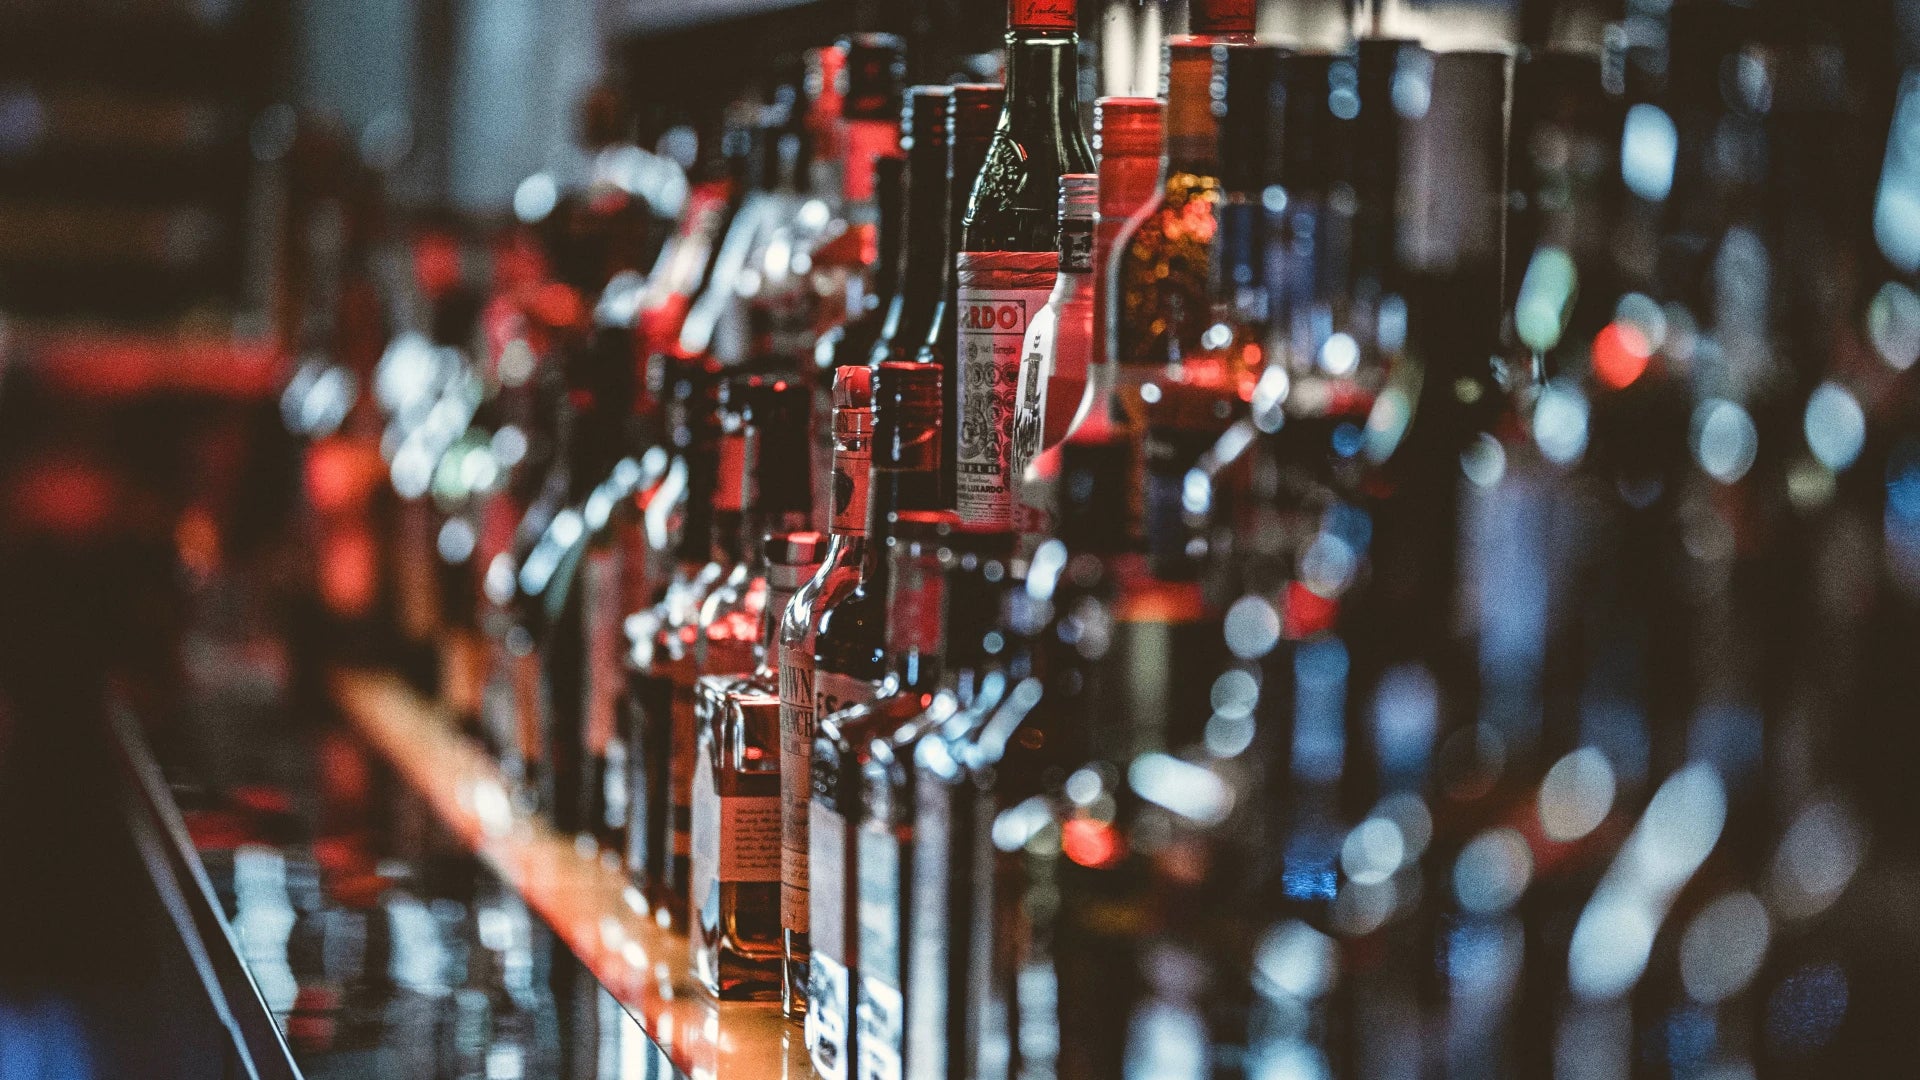 liqueurs bottles lined up in a bar